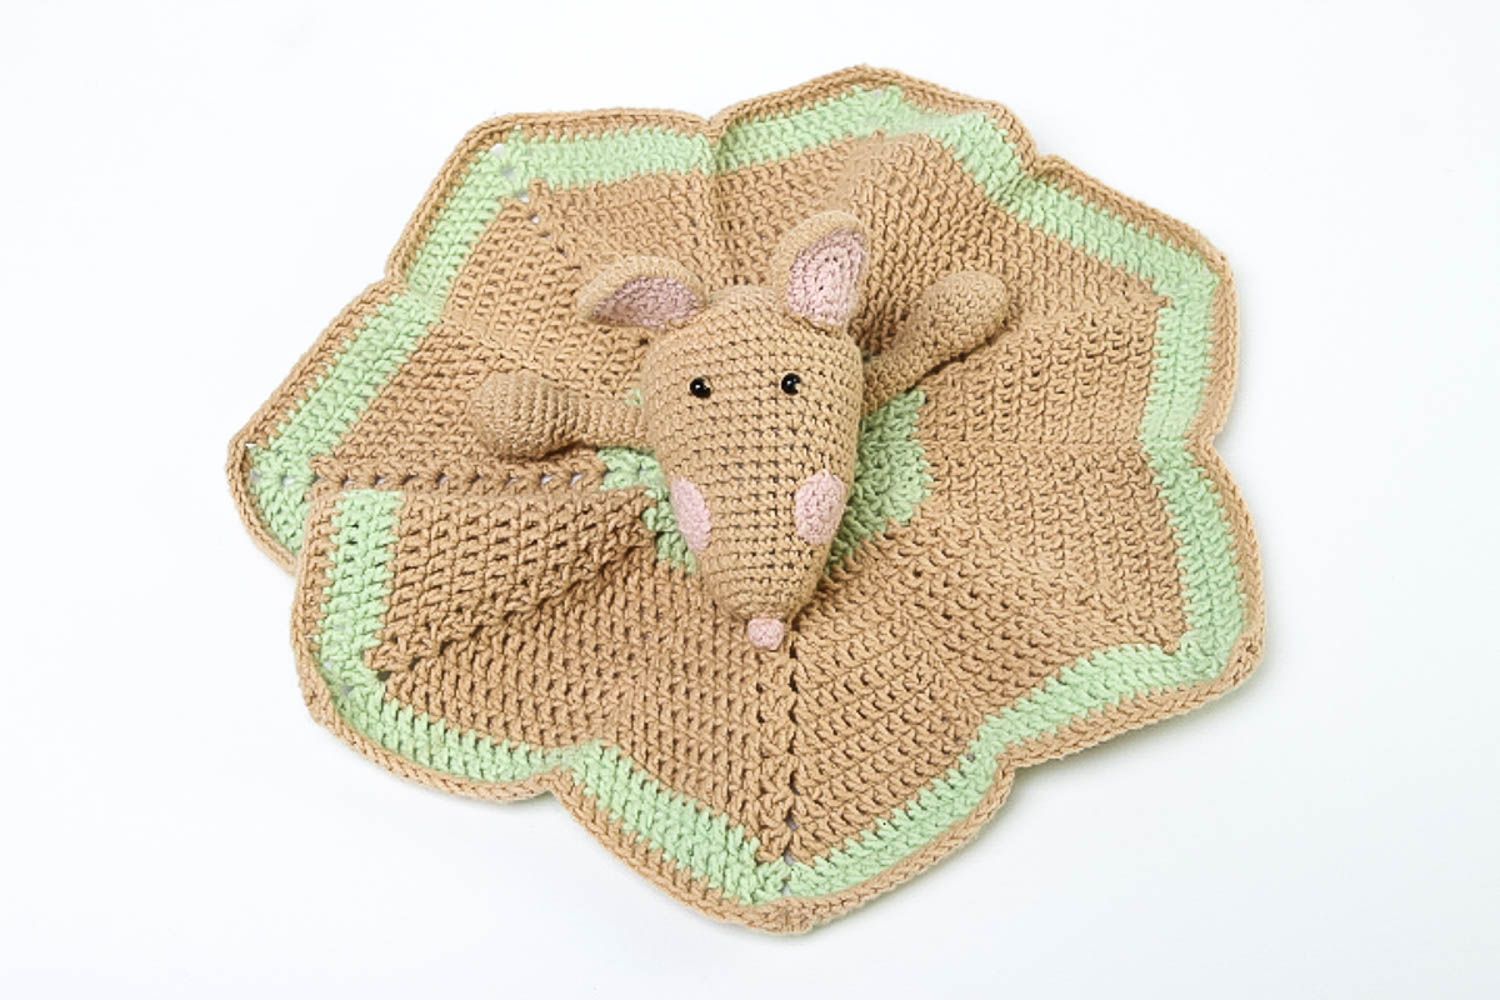 Handmade crocheted toy for babies nursery decor ideas stuffed toy for children photo 2